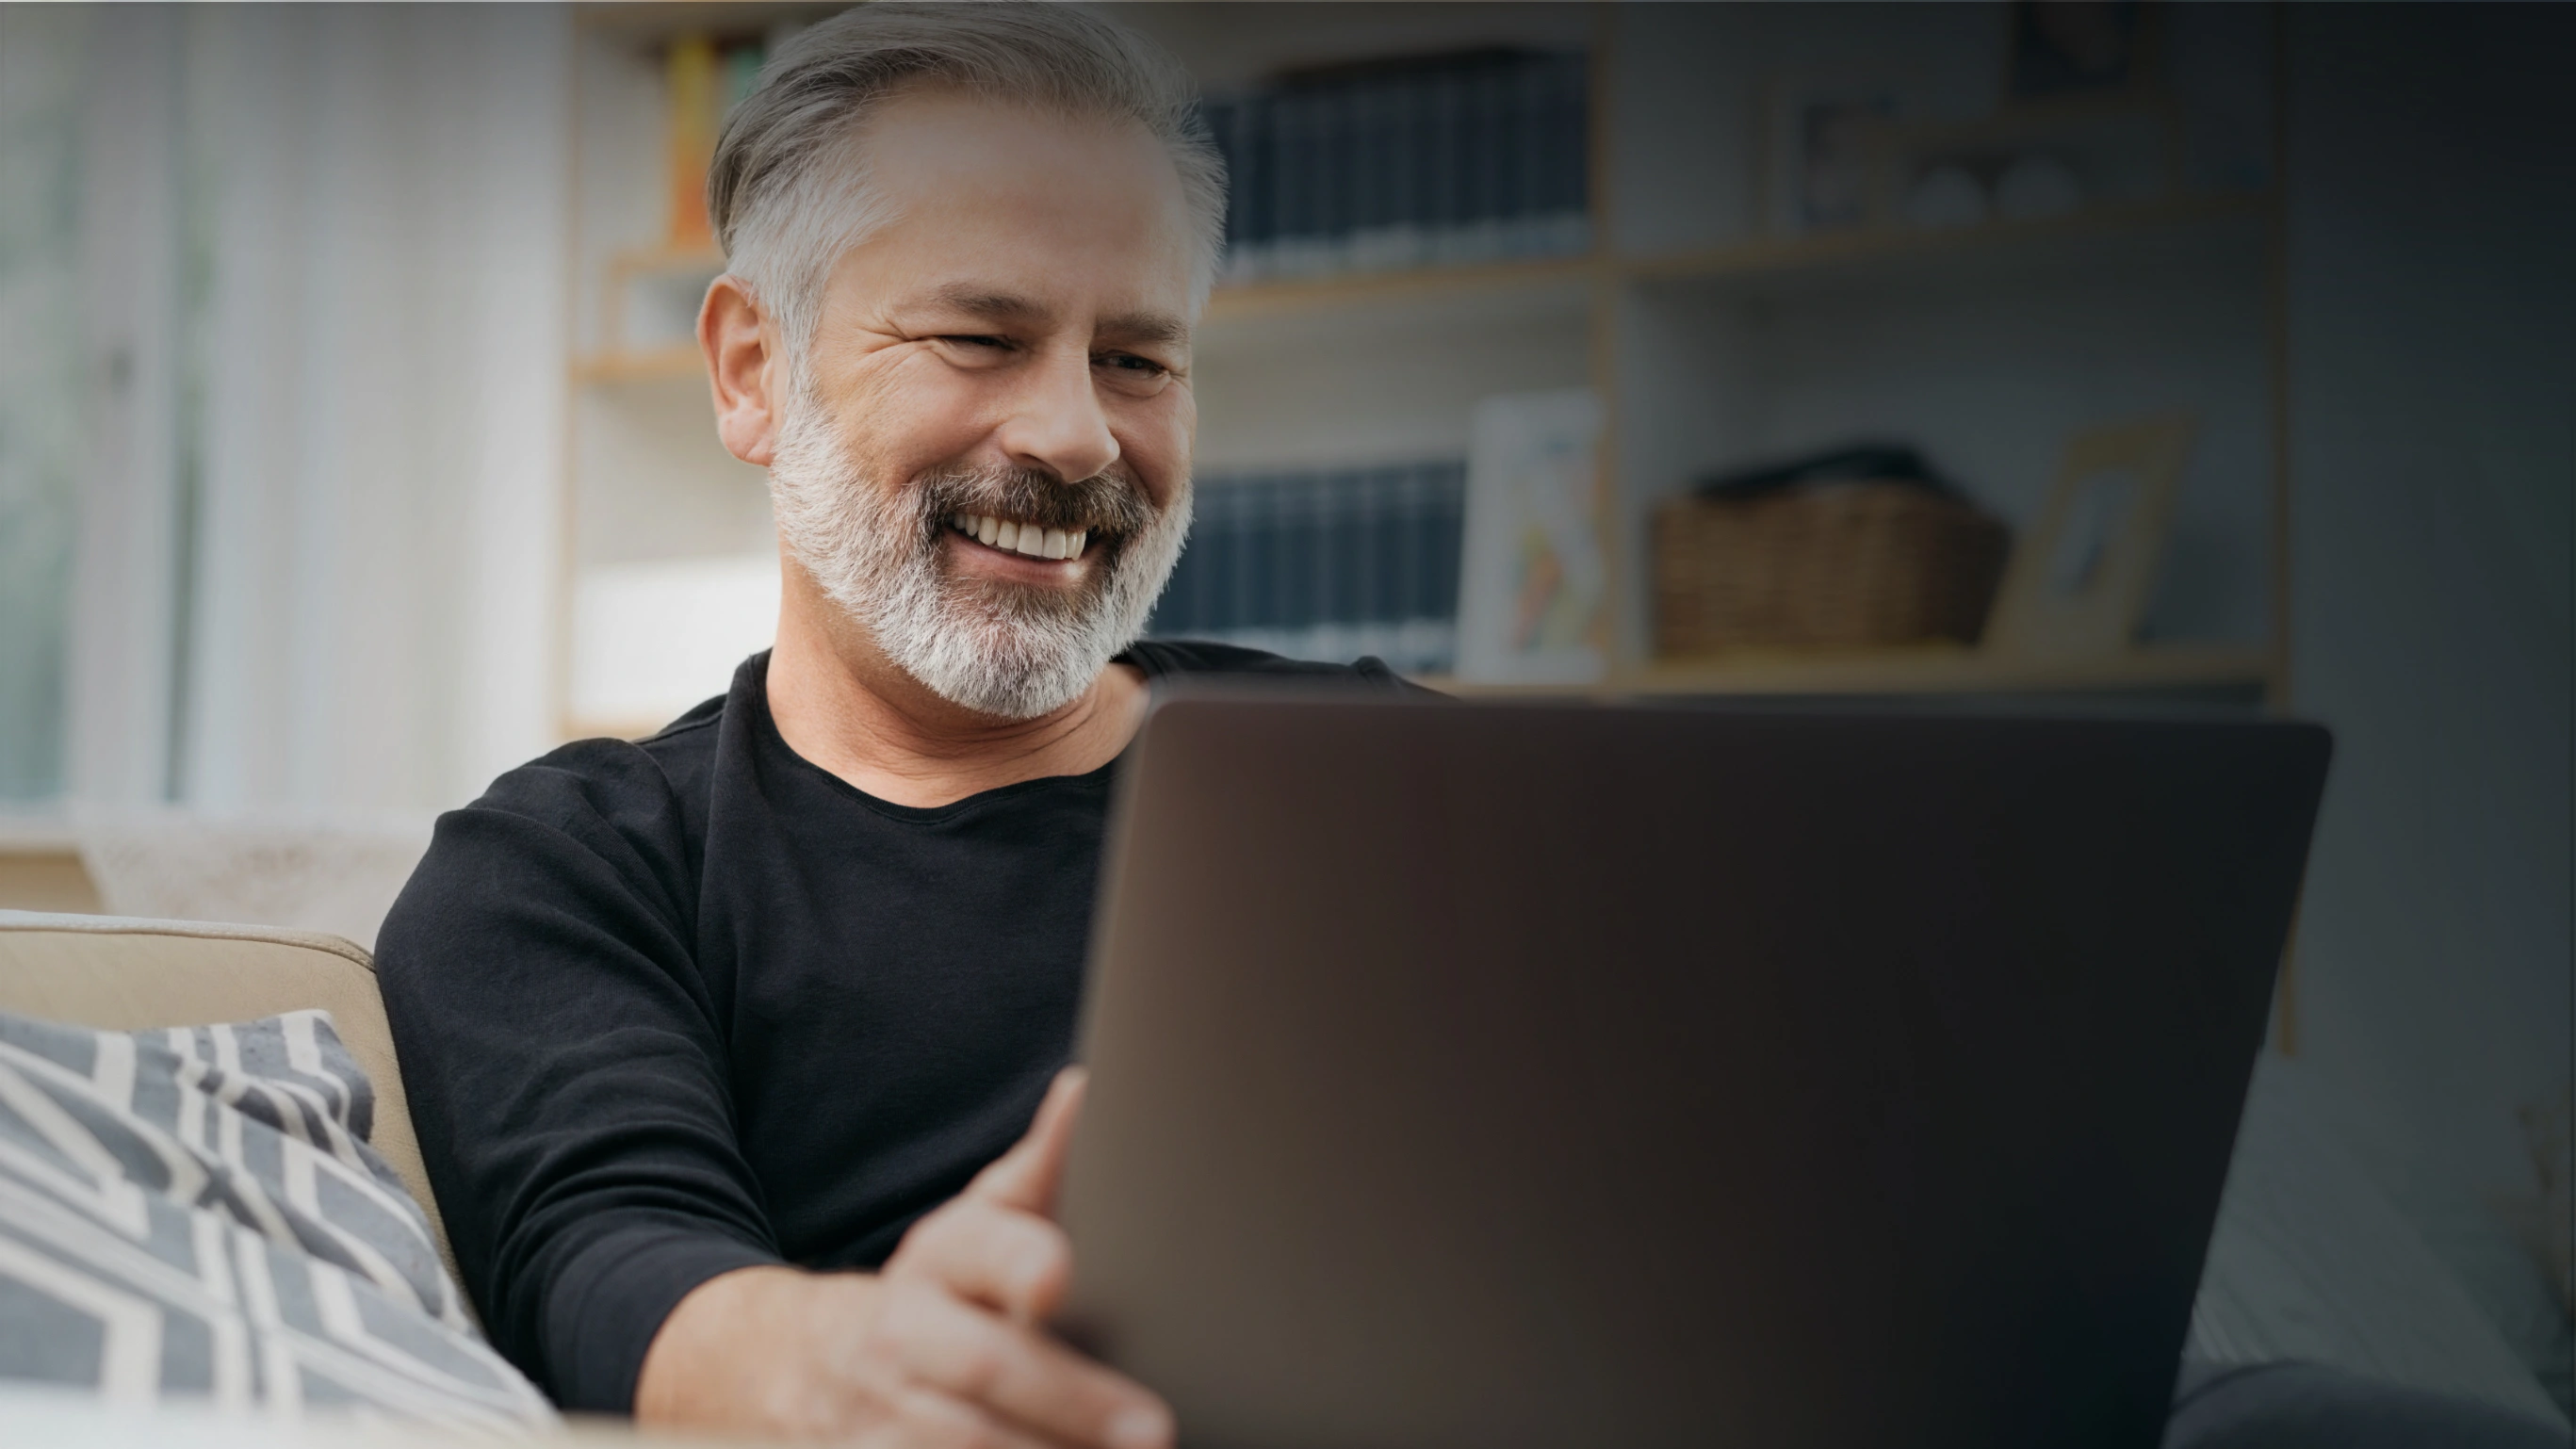 Elderly man smiling with laptop